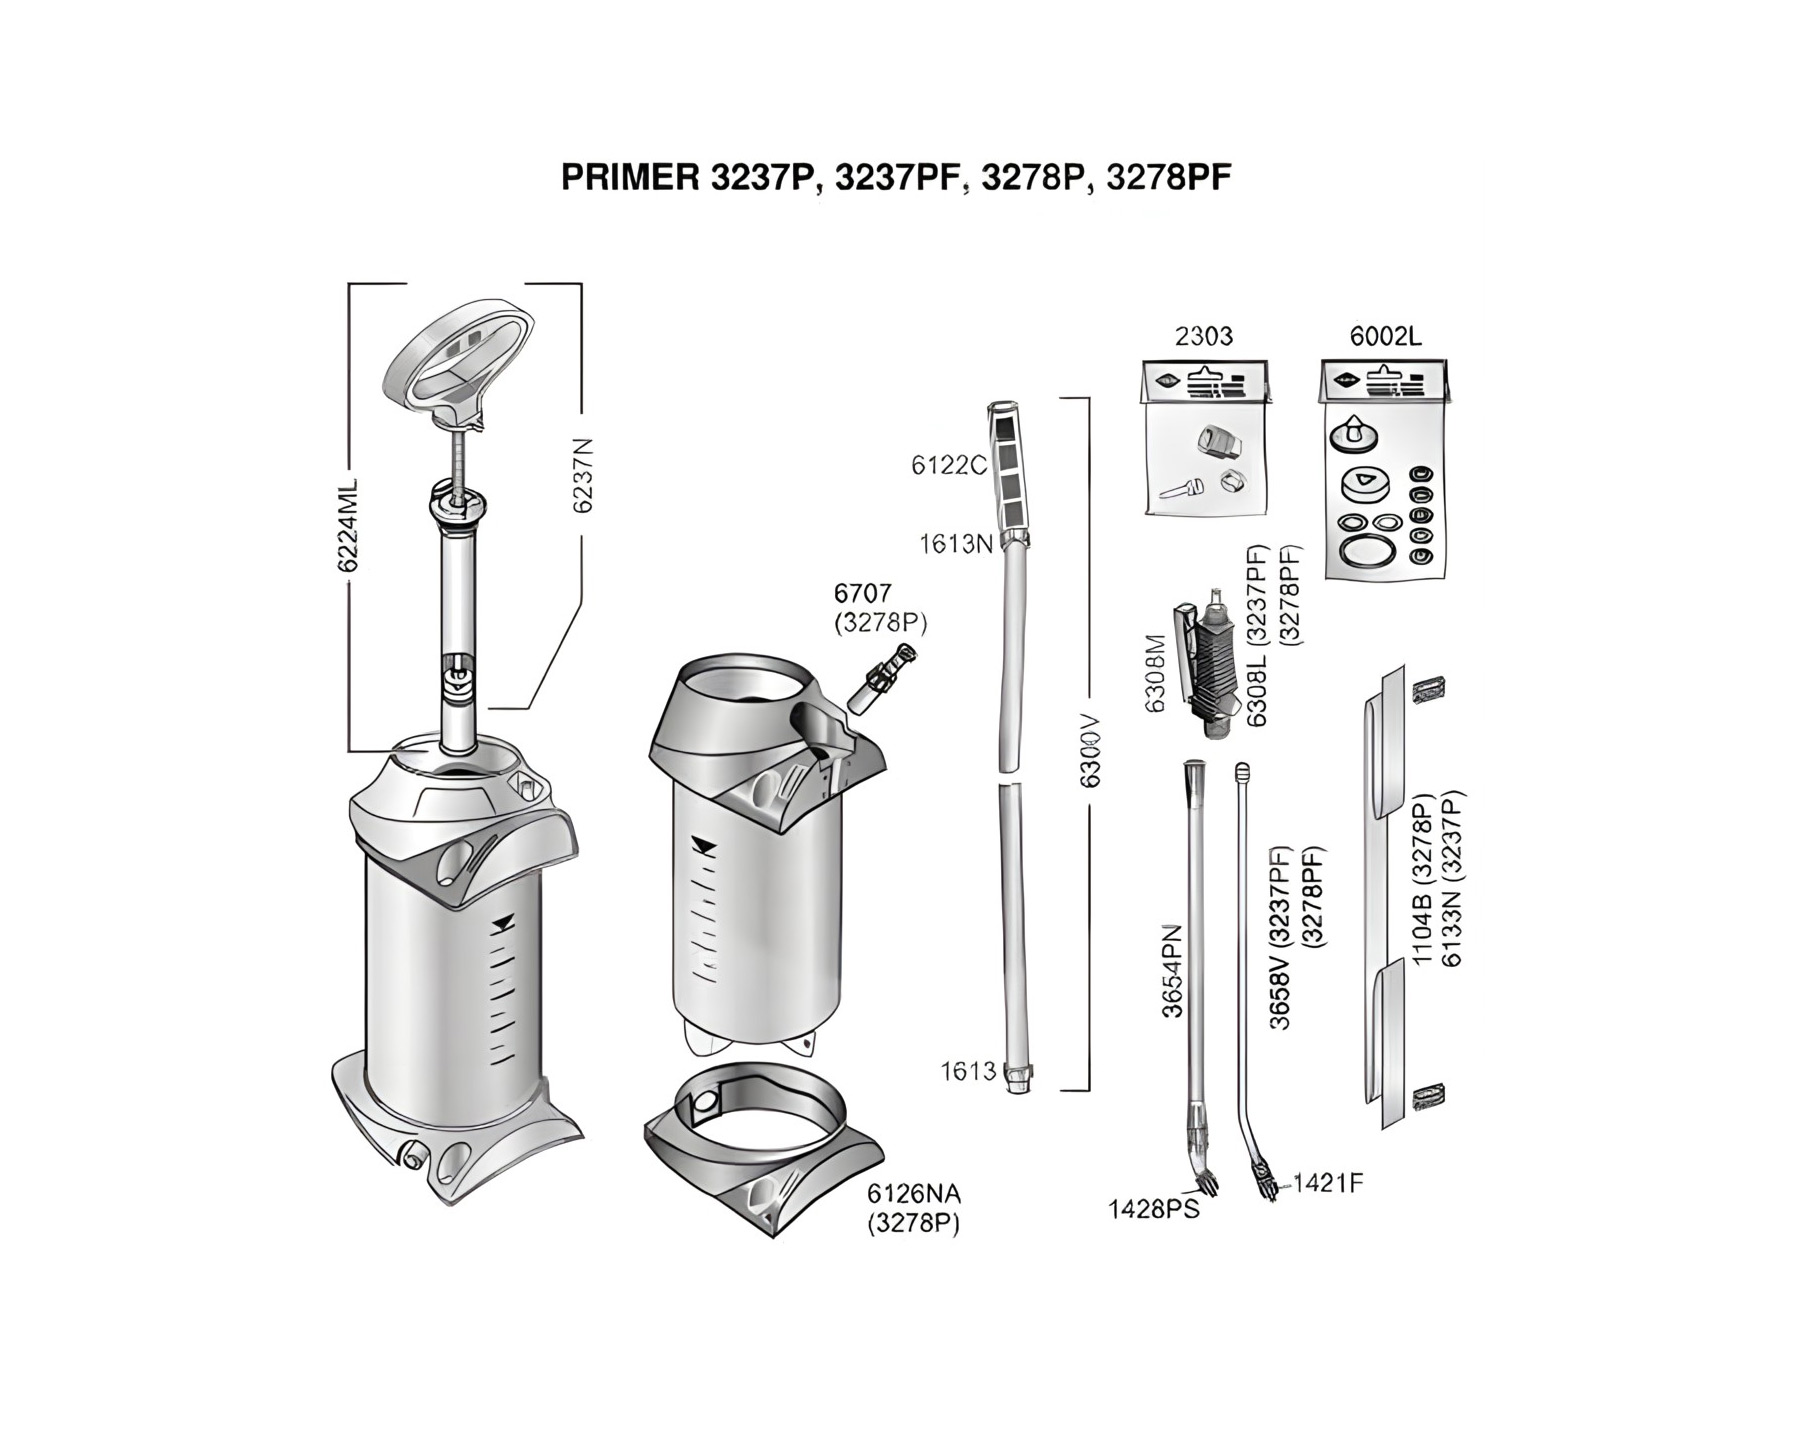 5 litre Primer pressure sprayer by Mesto - parts diagram